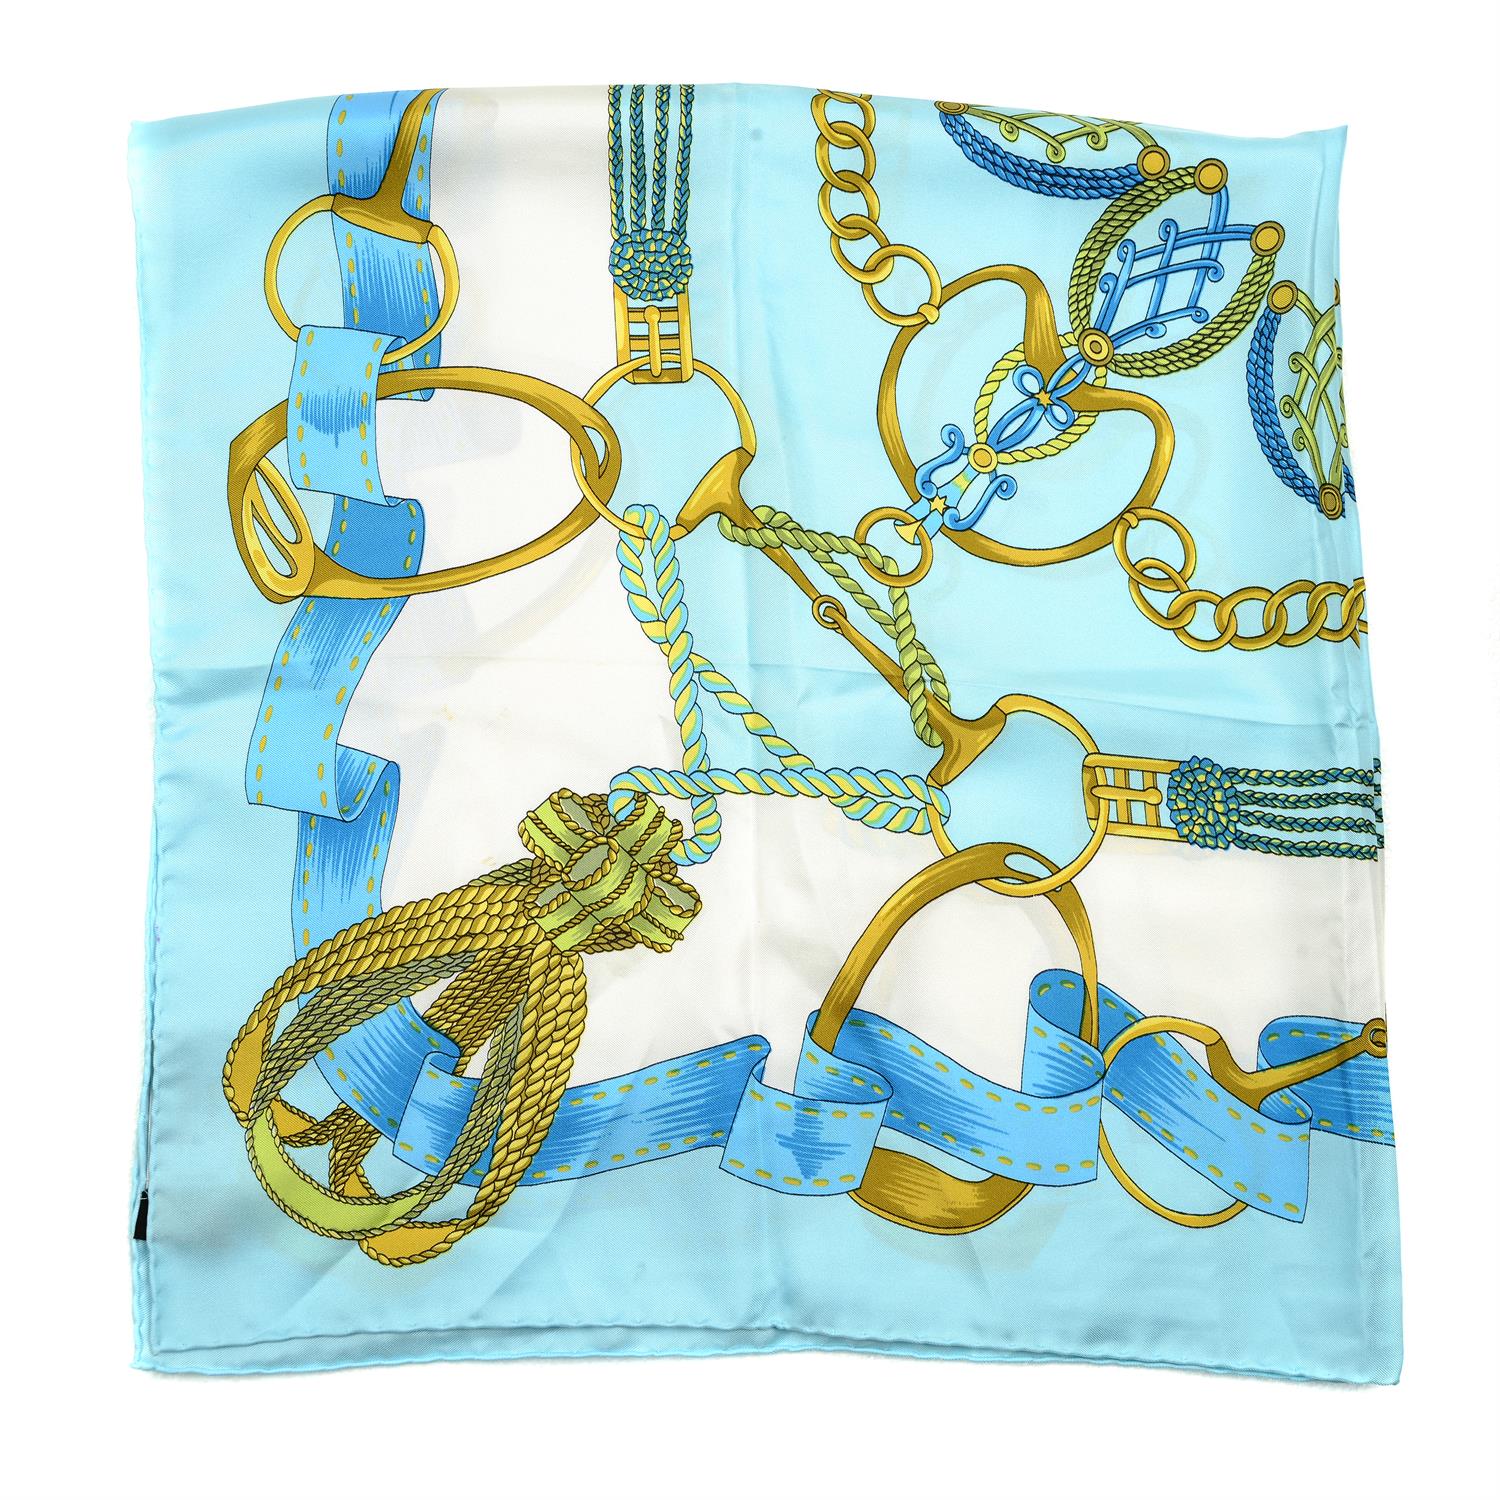 HARRODS - four silk scarfs. - Image 3 of 5